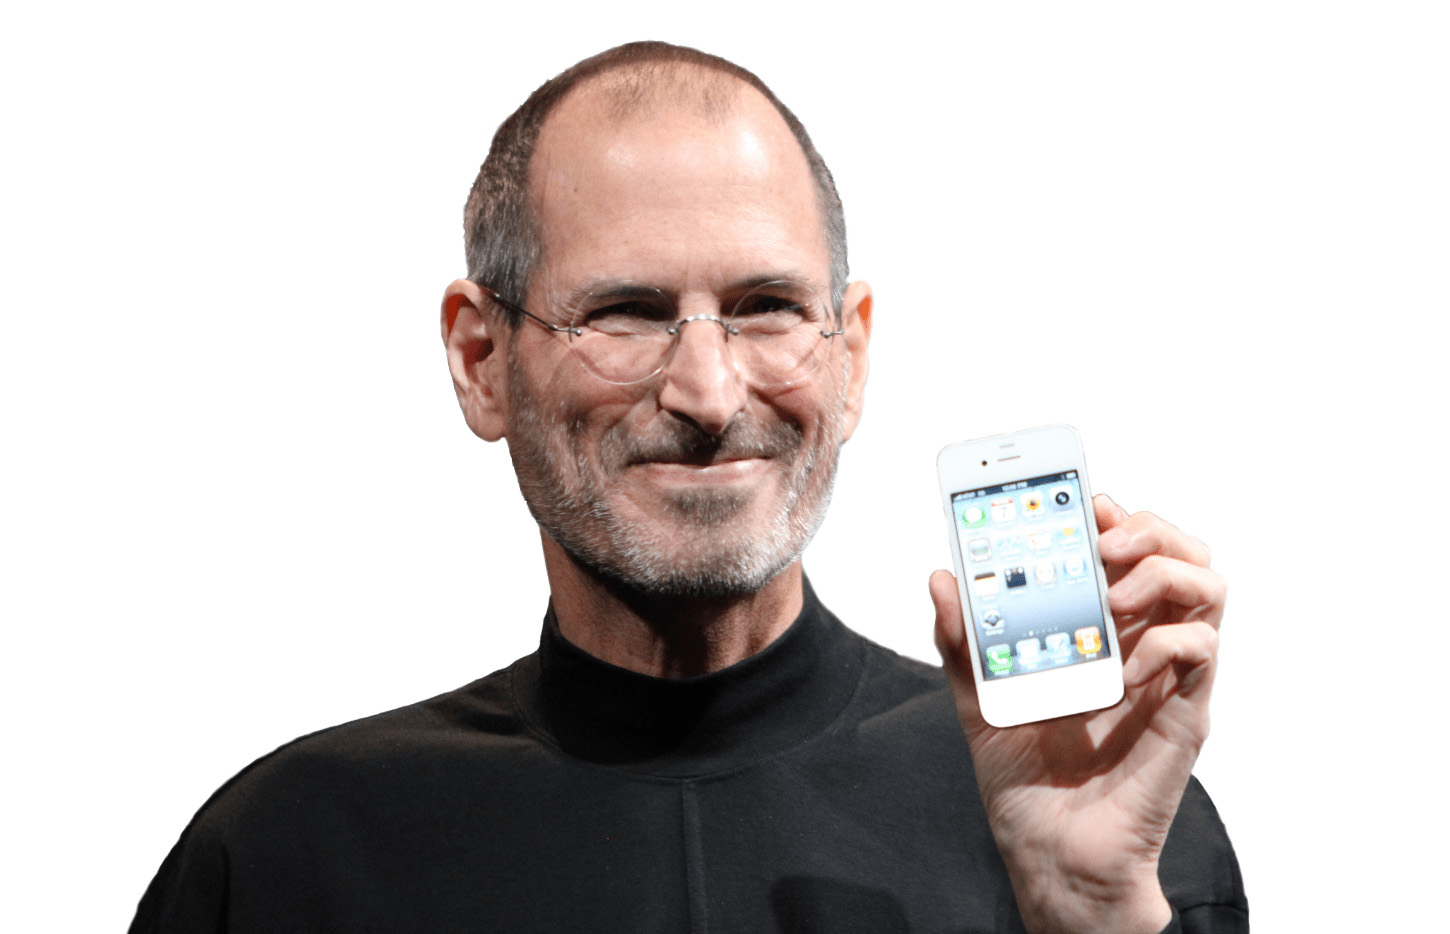 “Steve Jobs Headshot 2010” by Matthew Yohe